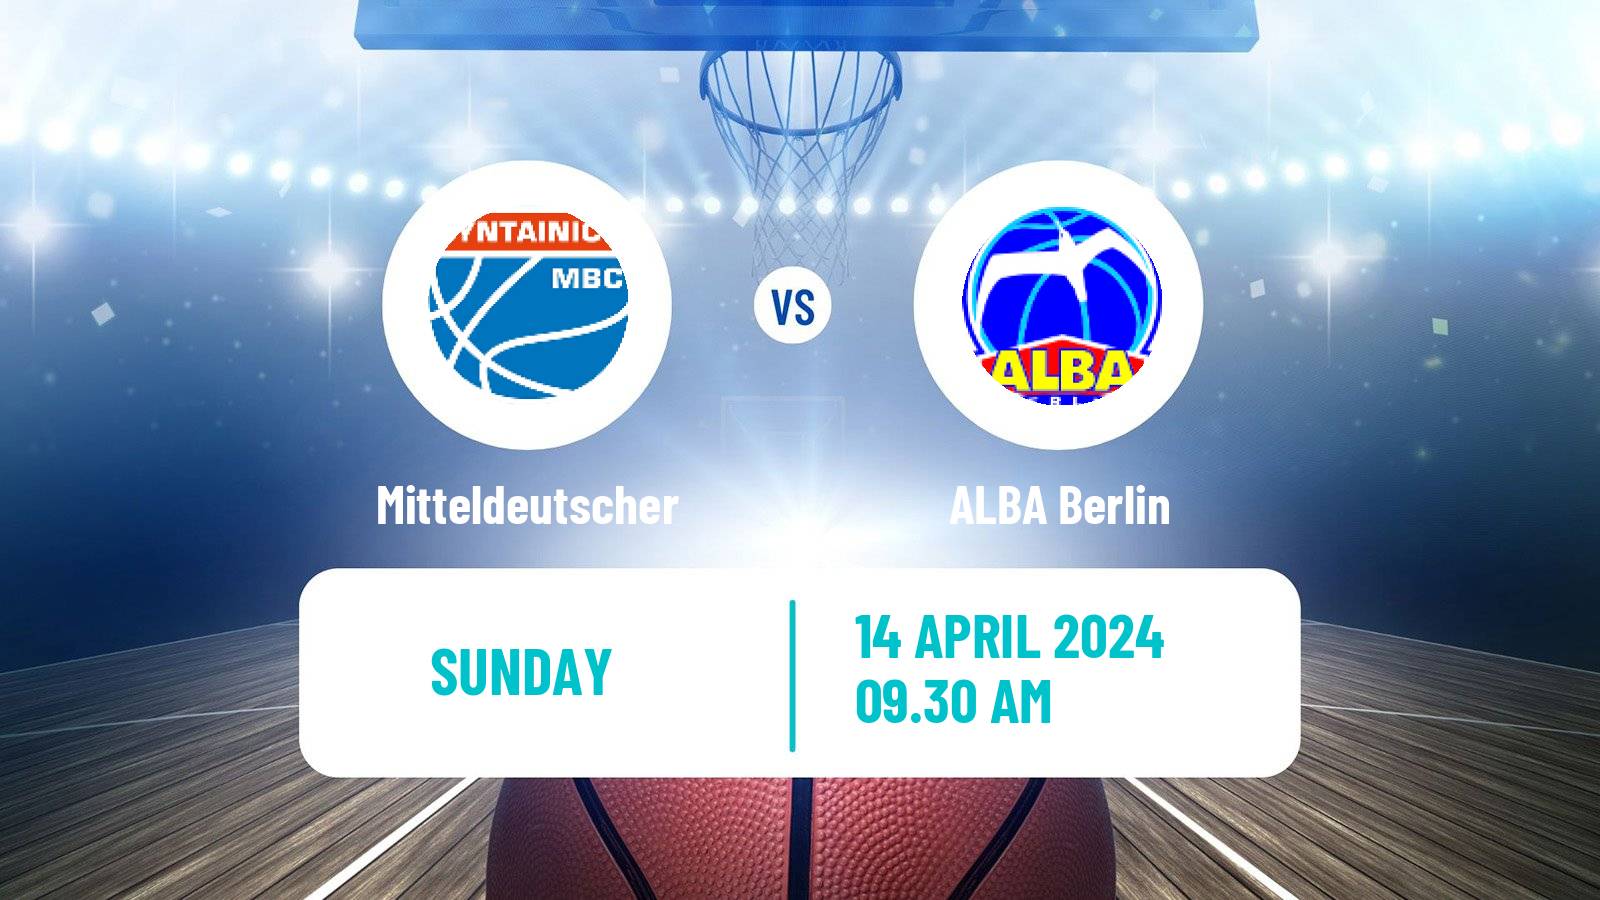 Basketball German BBL Mitteldeutscher - ALBA Berlin